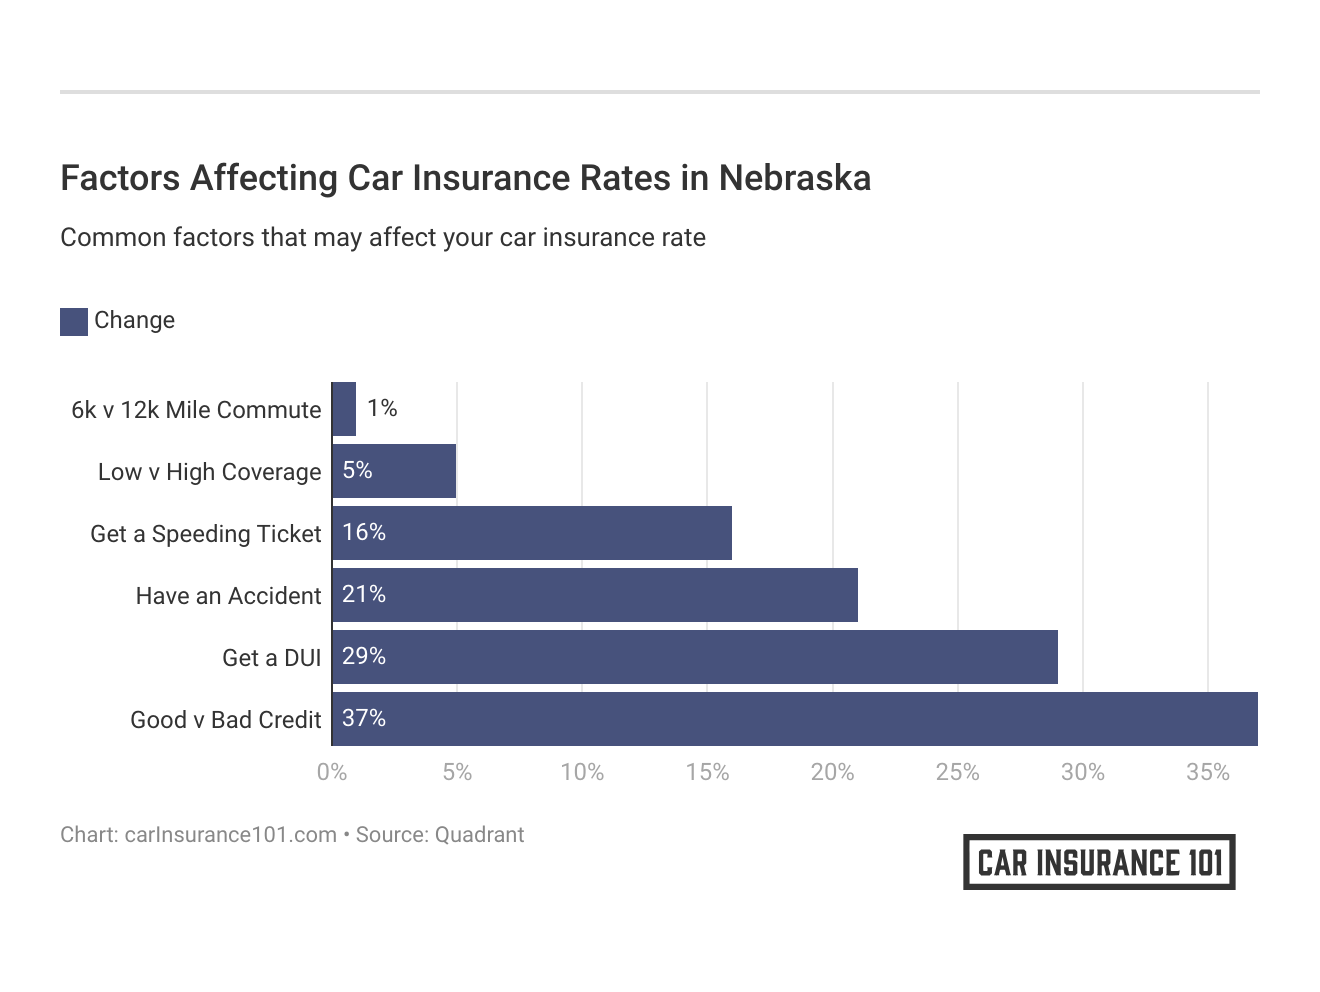 <h3>Factors Affecting Car Insurance Rates in Nebraska</h3>